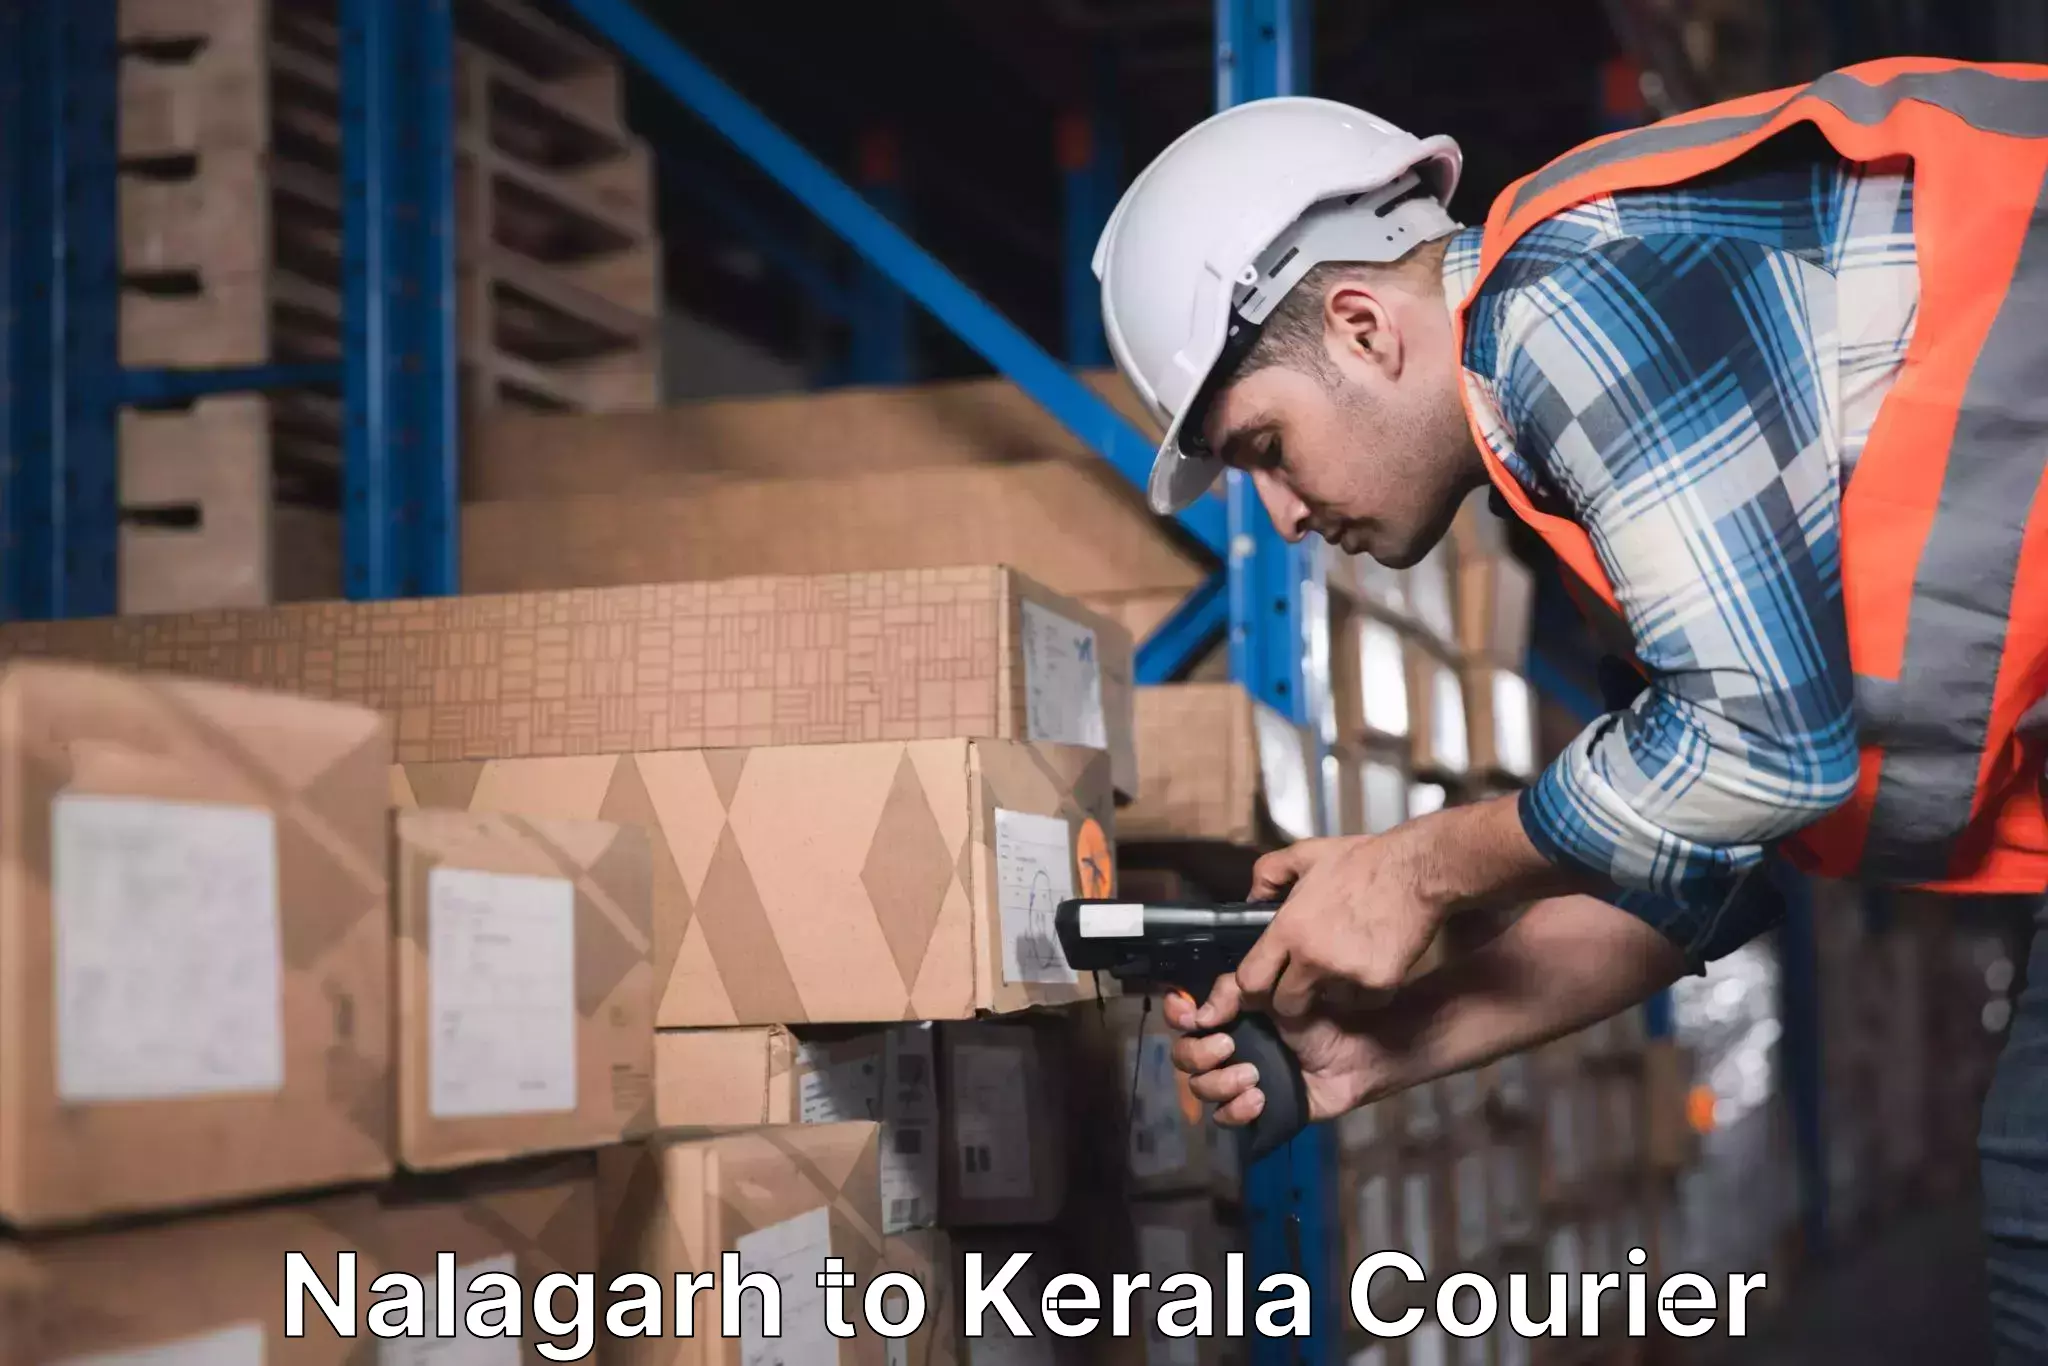 Same-day delivery solutions Nalagarh to Kattappana